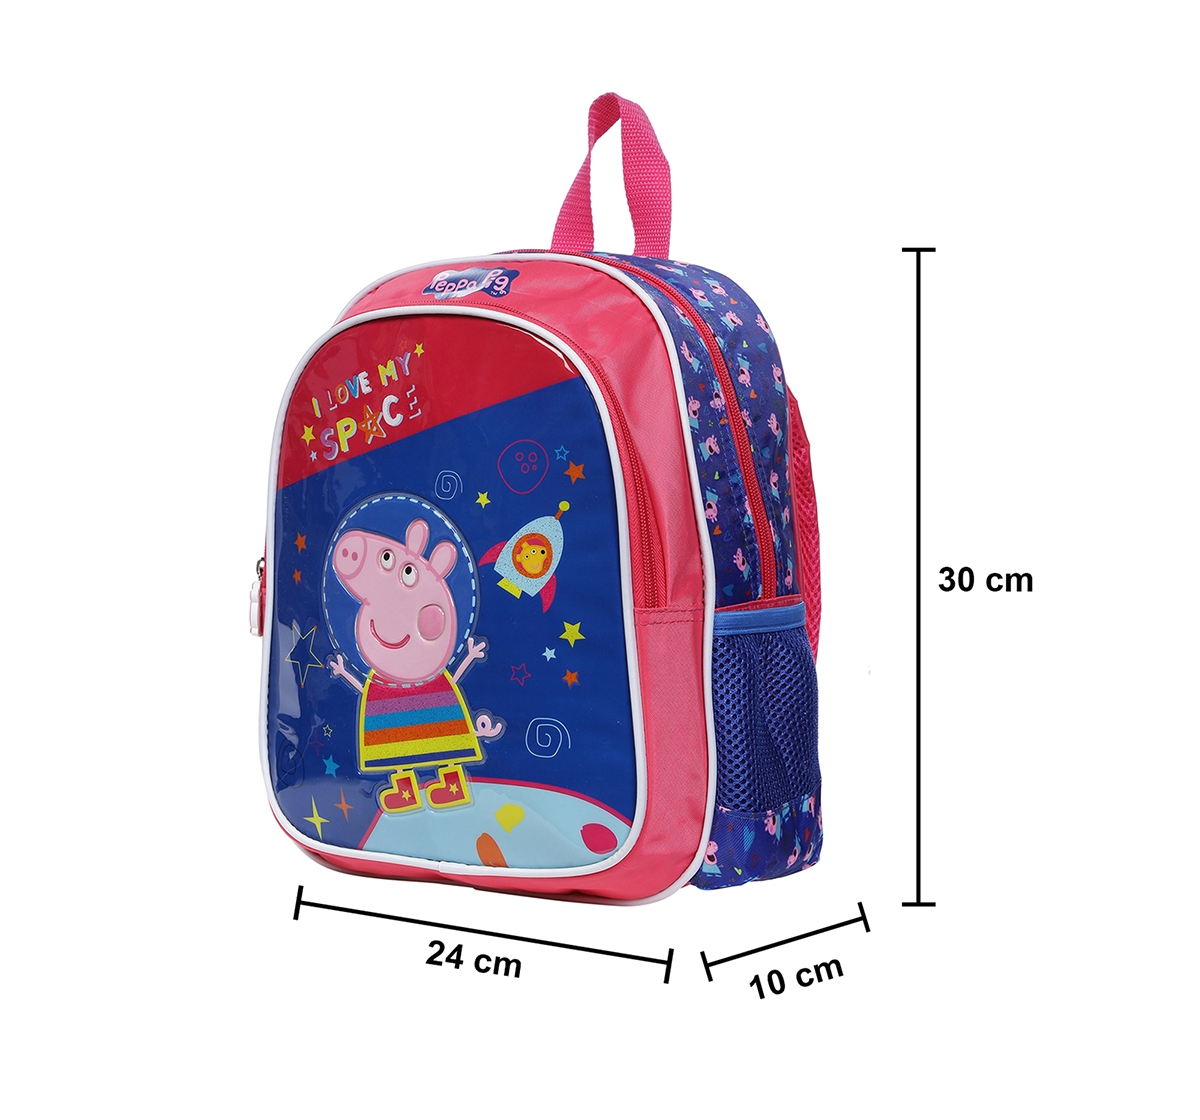 Peppa Pig |  Peppa Pig I Love My Space 12 Backpack Bags for Kids age 3Y+  5